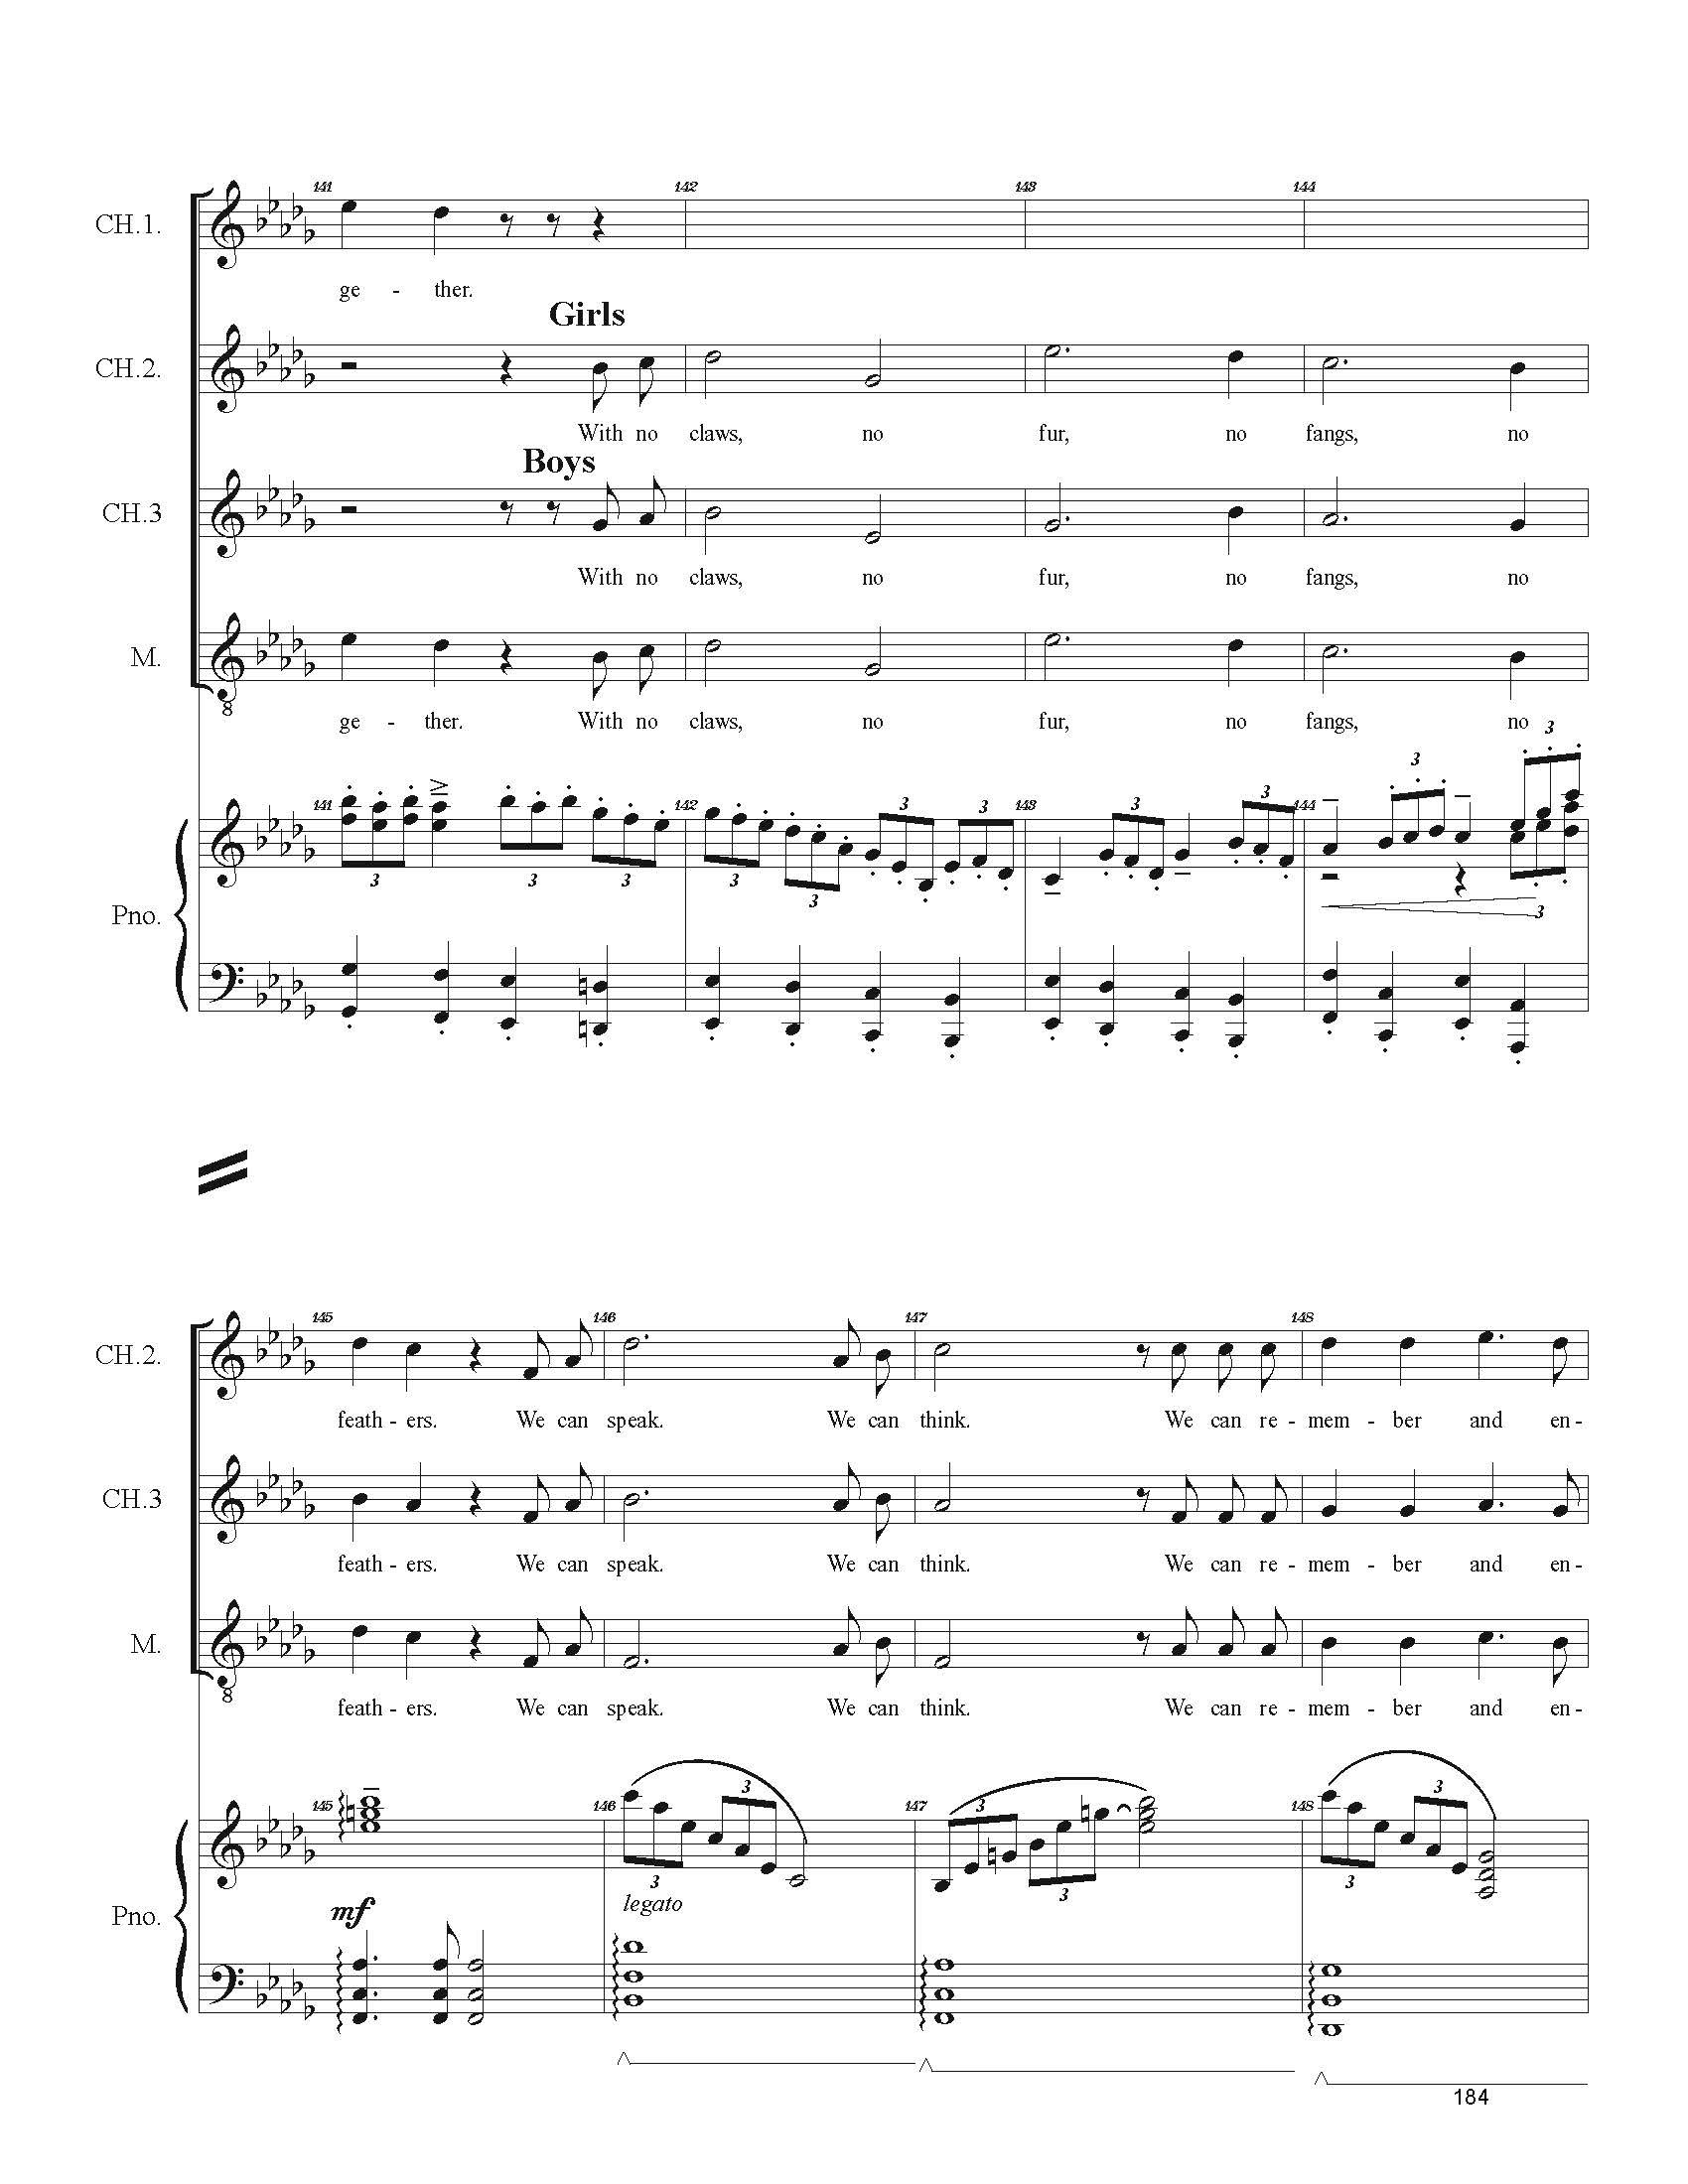 FULL PIANO VOCAL SCORE DRAFT 1 - Score_Page_184.jpg